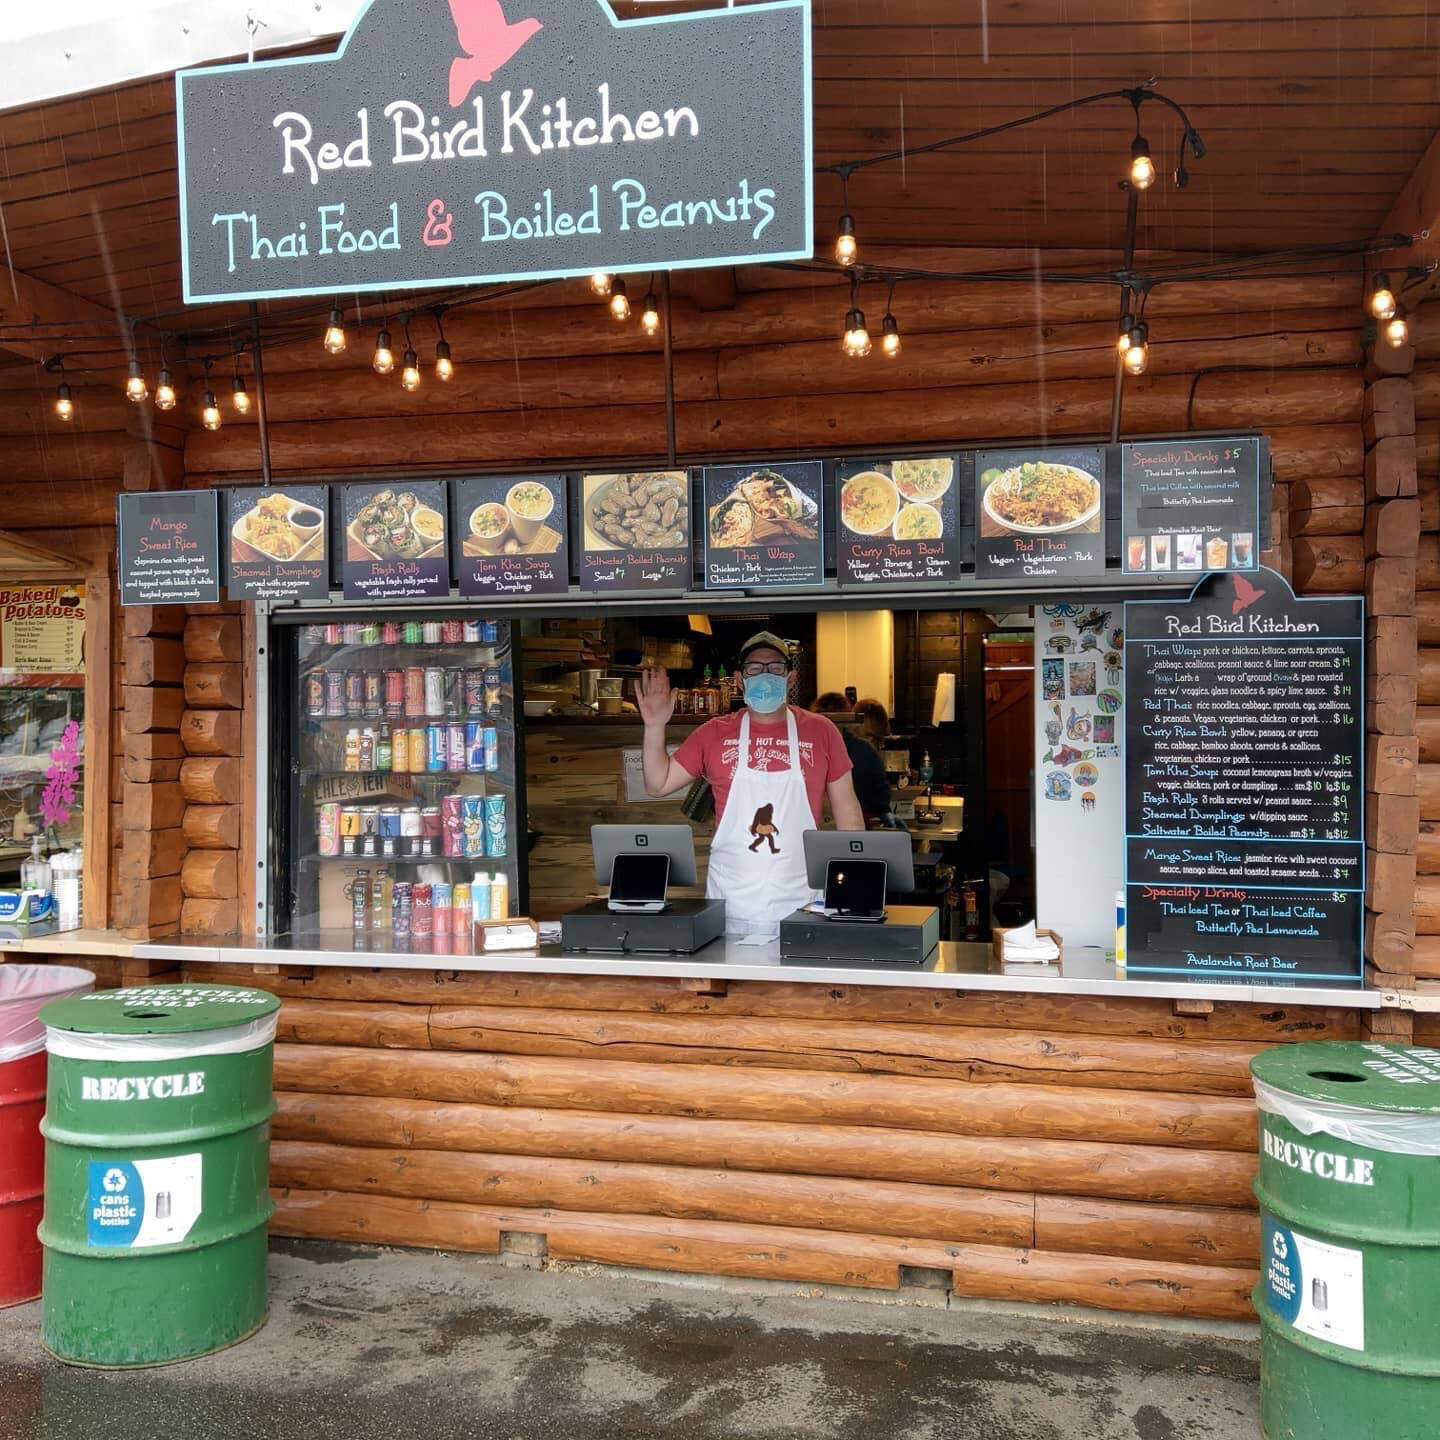 Red Bird Kitchen in their log cabin kitchen at the Alaska State Fair in 2022. (Photo provided by Red Bird Kitchen)